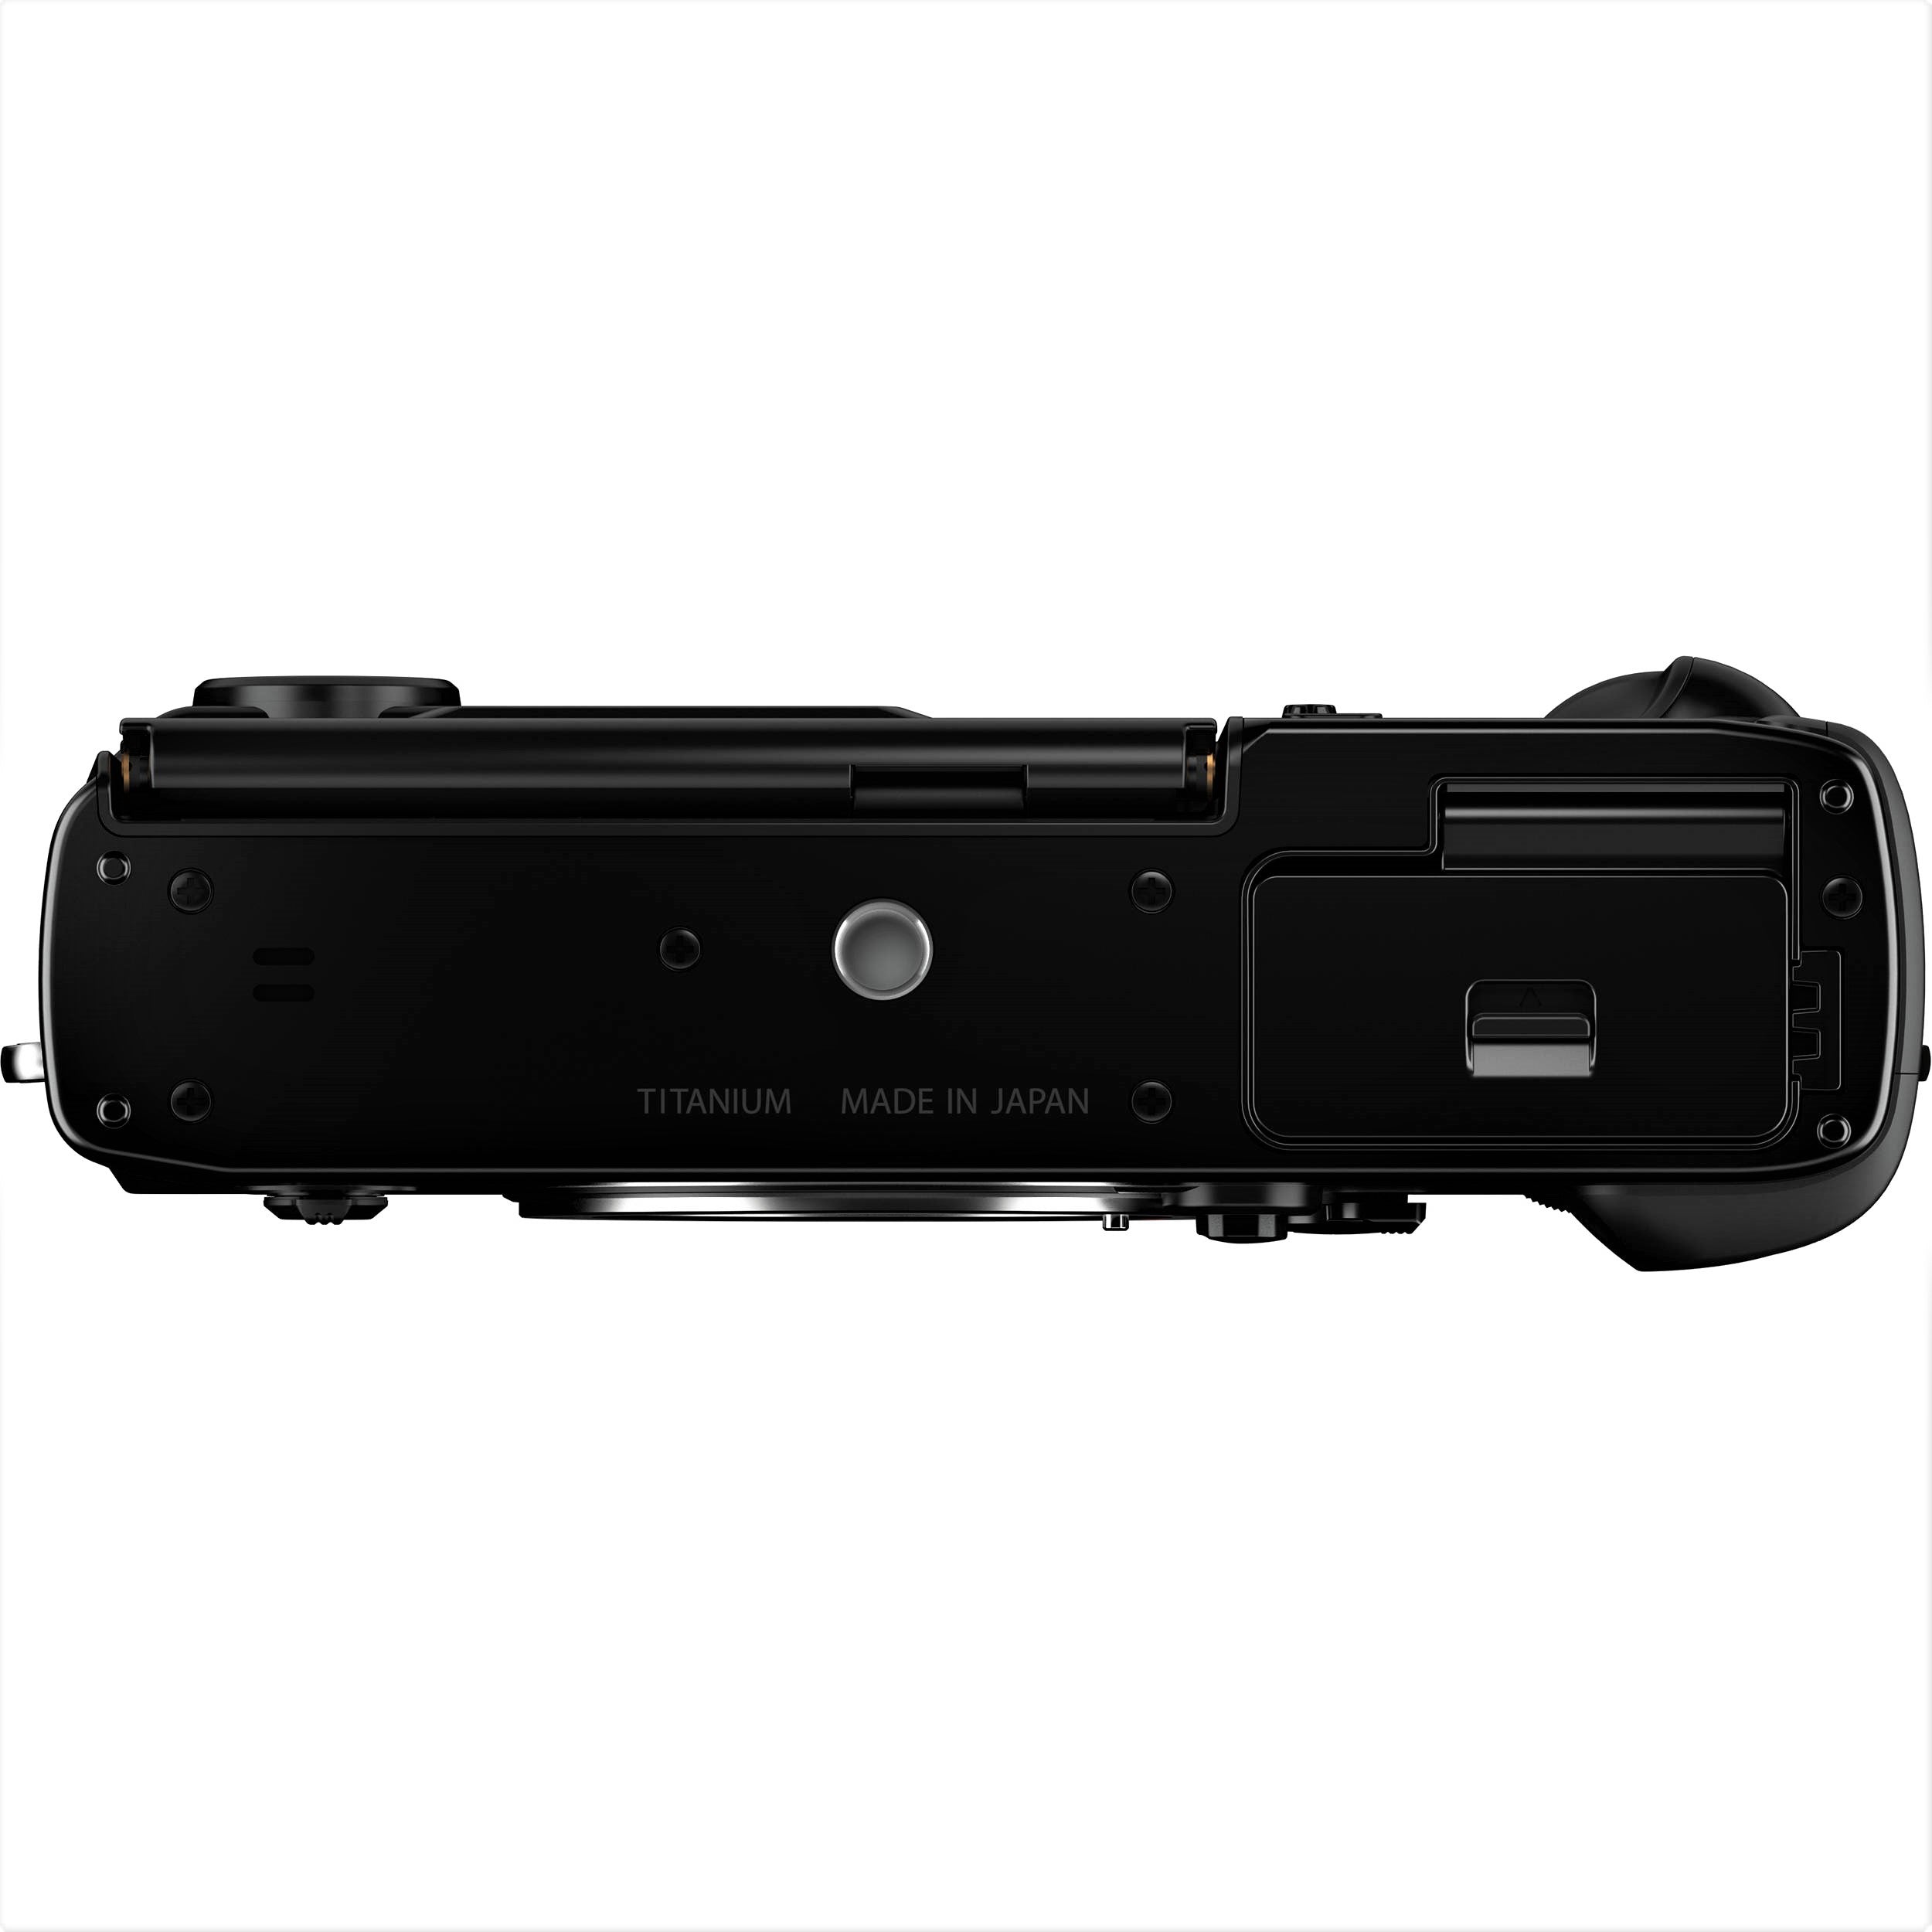 Fujifilm X-Pro3 Mirrorless Camera (Black) - Bottom View